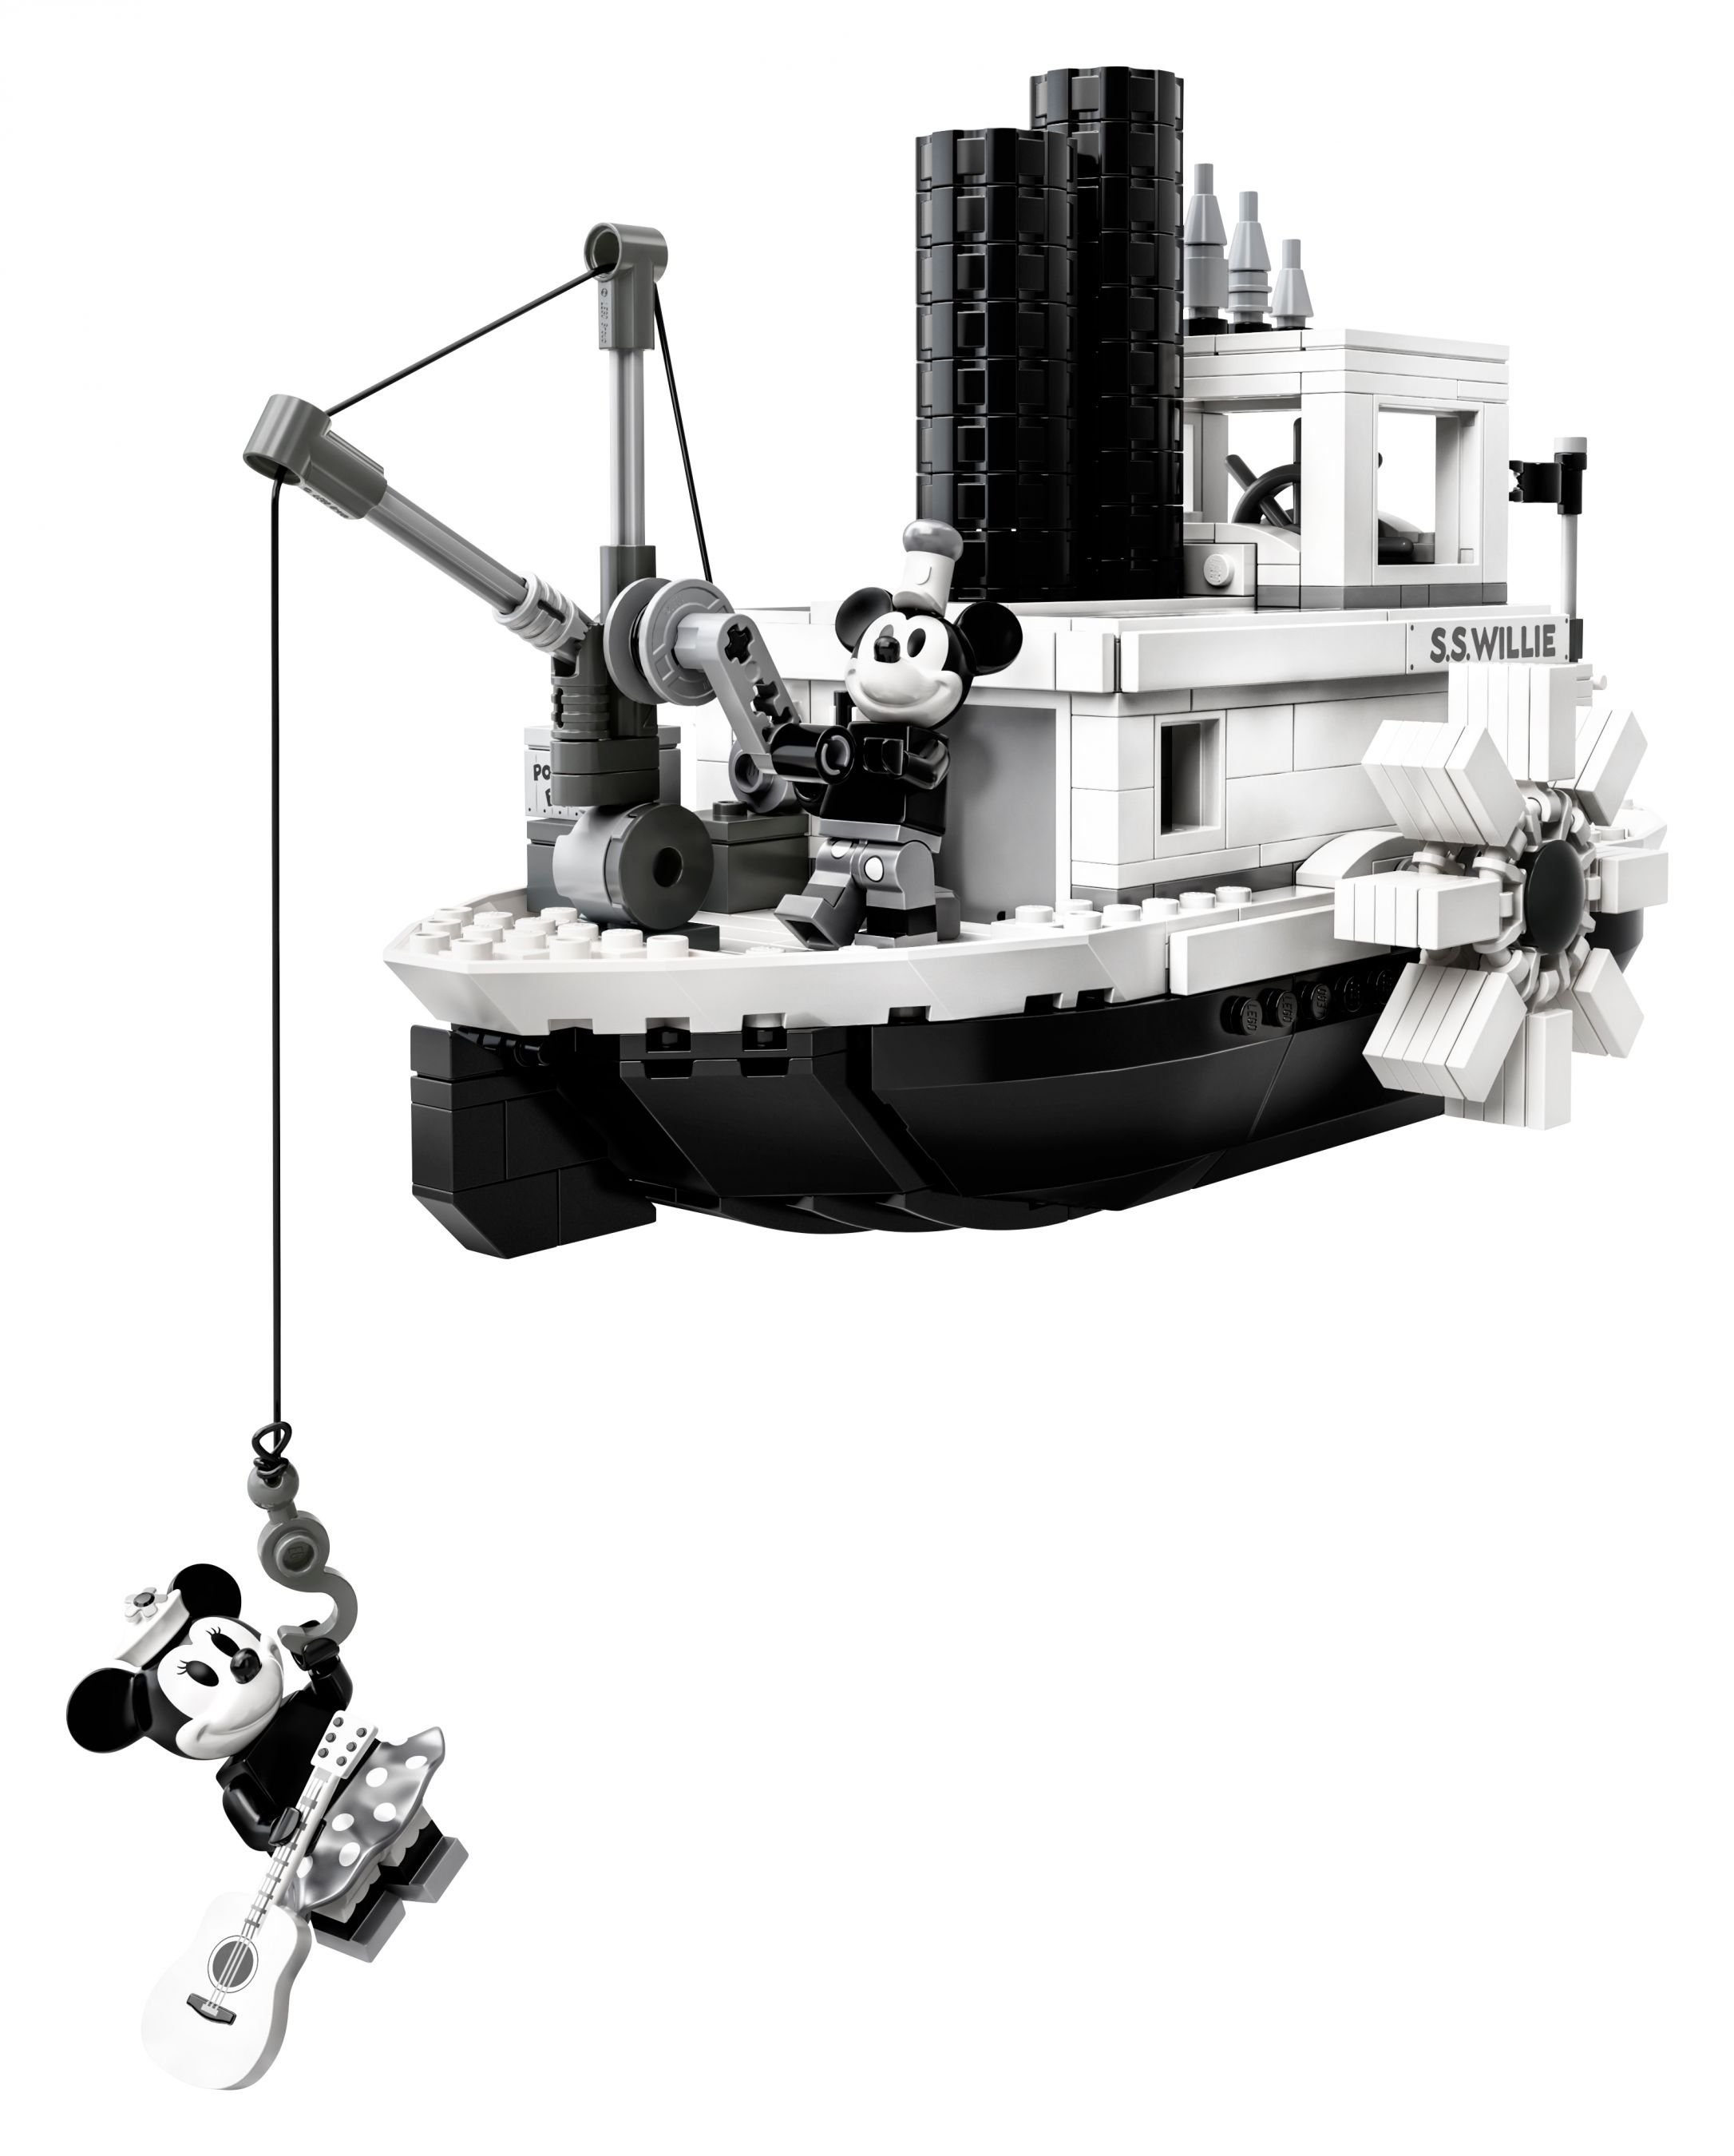 LEGO Ideas 21317 Steamboat Willie LEGO_21317_alt4.jpg